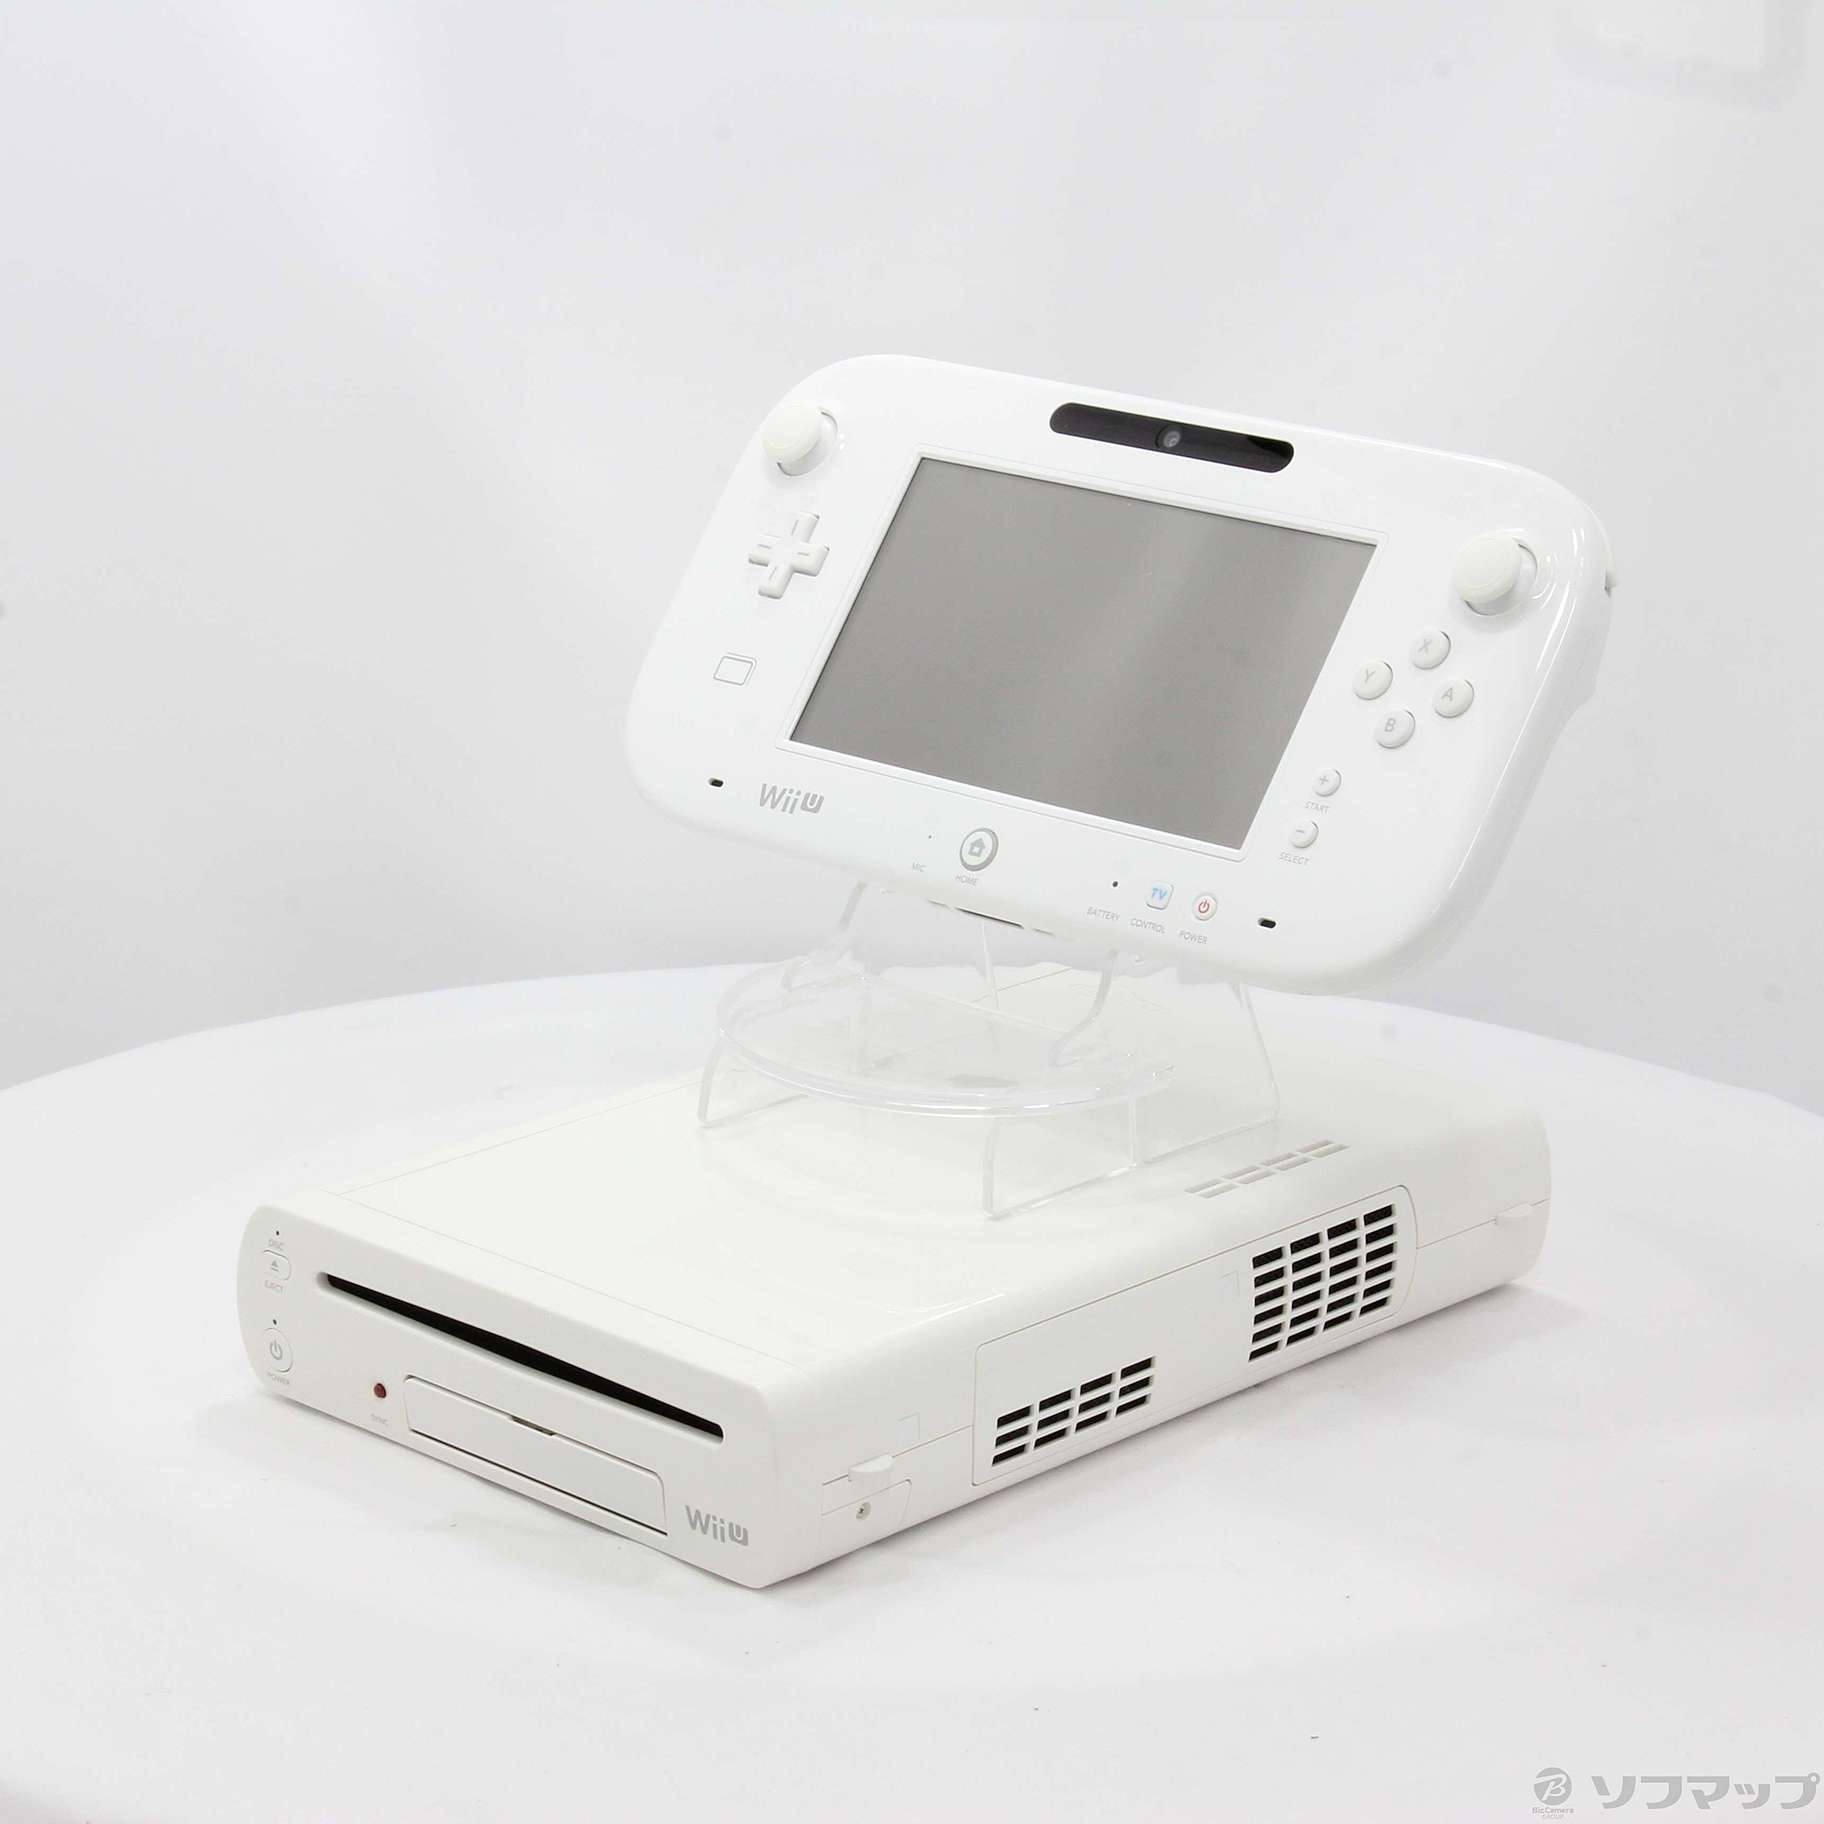 Nintendo Wii U WII U ベーシックセット - Nintendo Switch